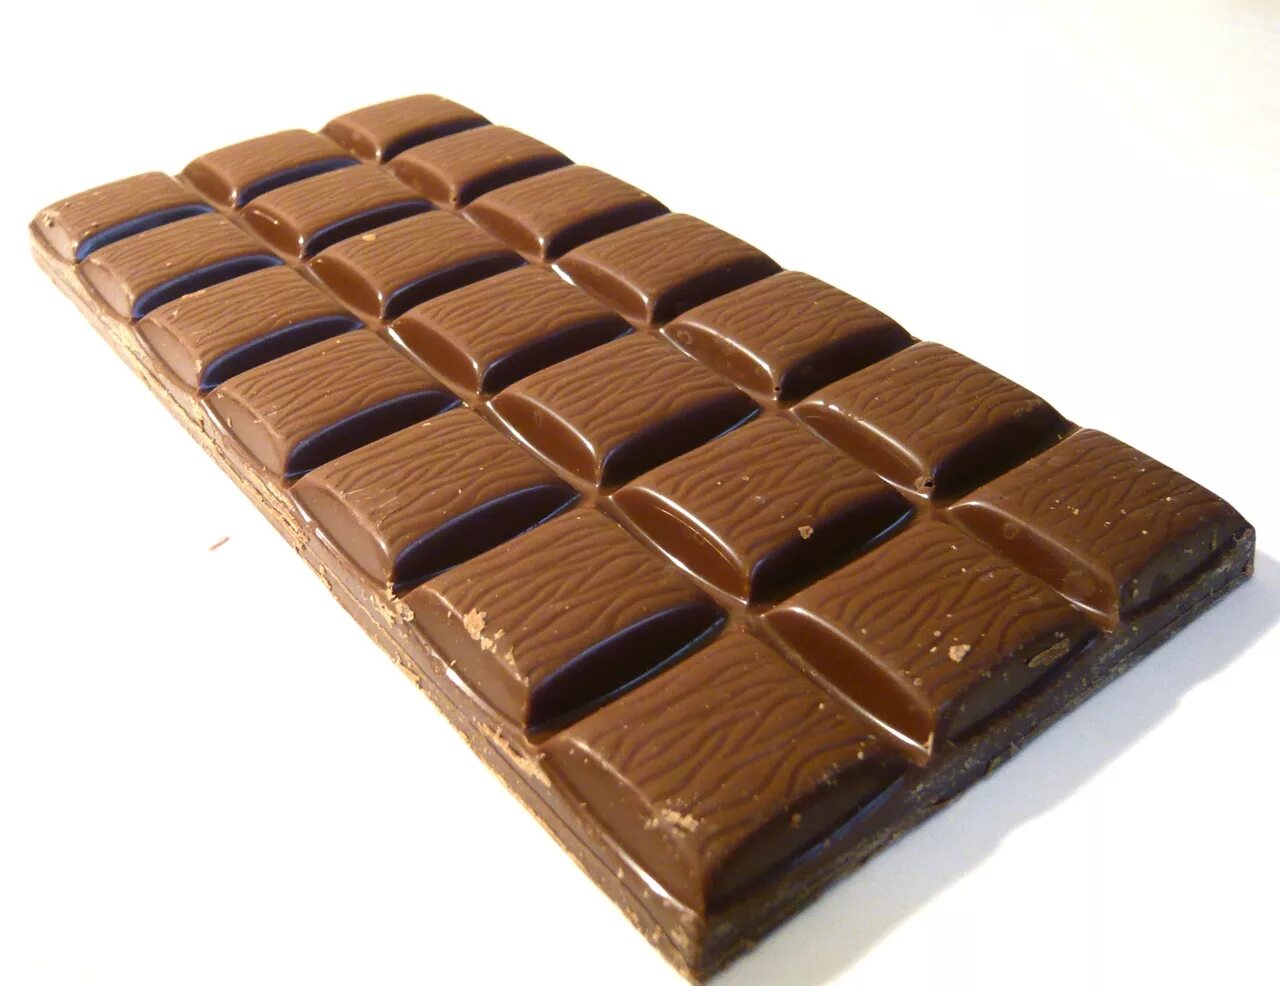 Bar of chocolate. Плитка шоколада. Шоколадная плитка. Шекалатка. Молочный шоколад плитка.